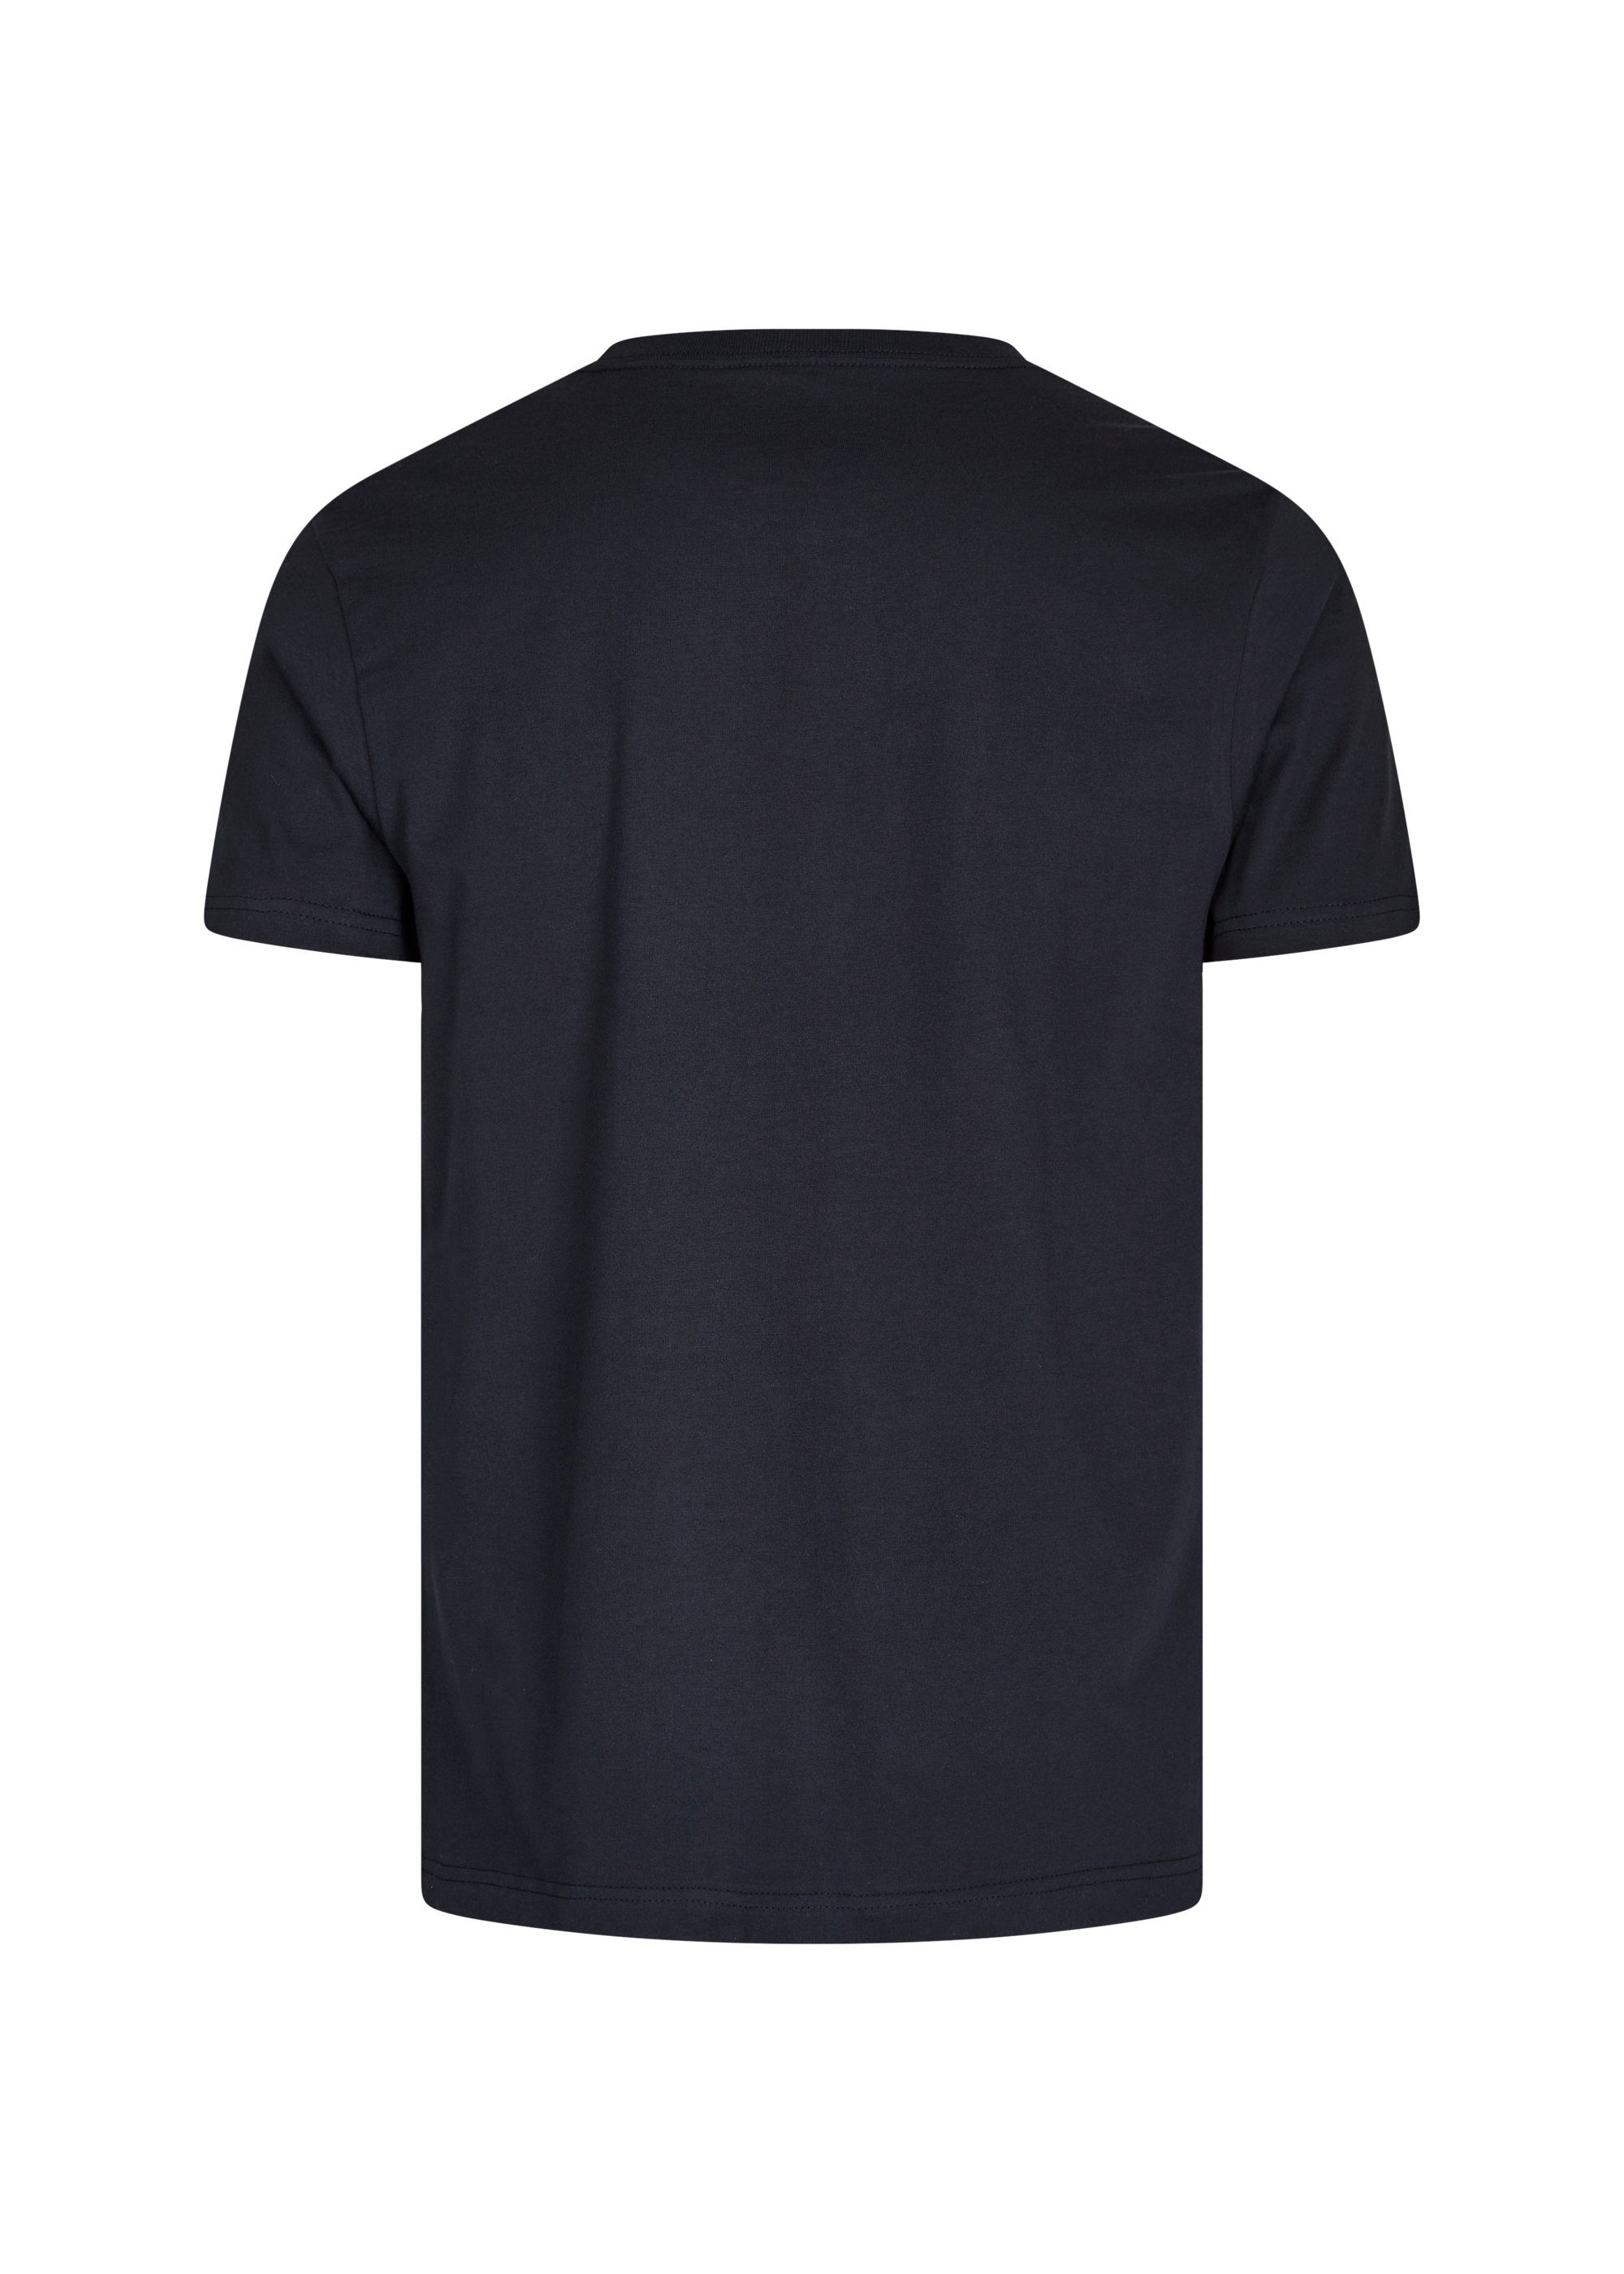 Cleptomanicx T-Shirt So Long großem Frontprint mit blau